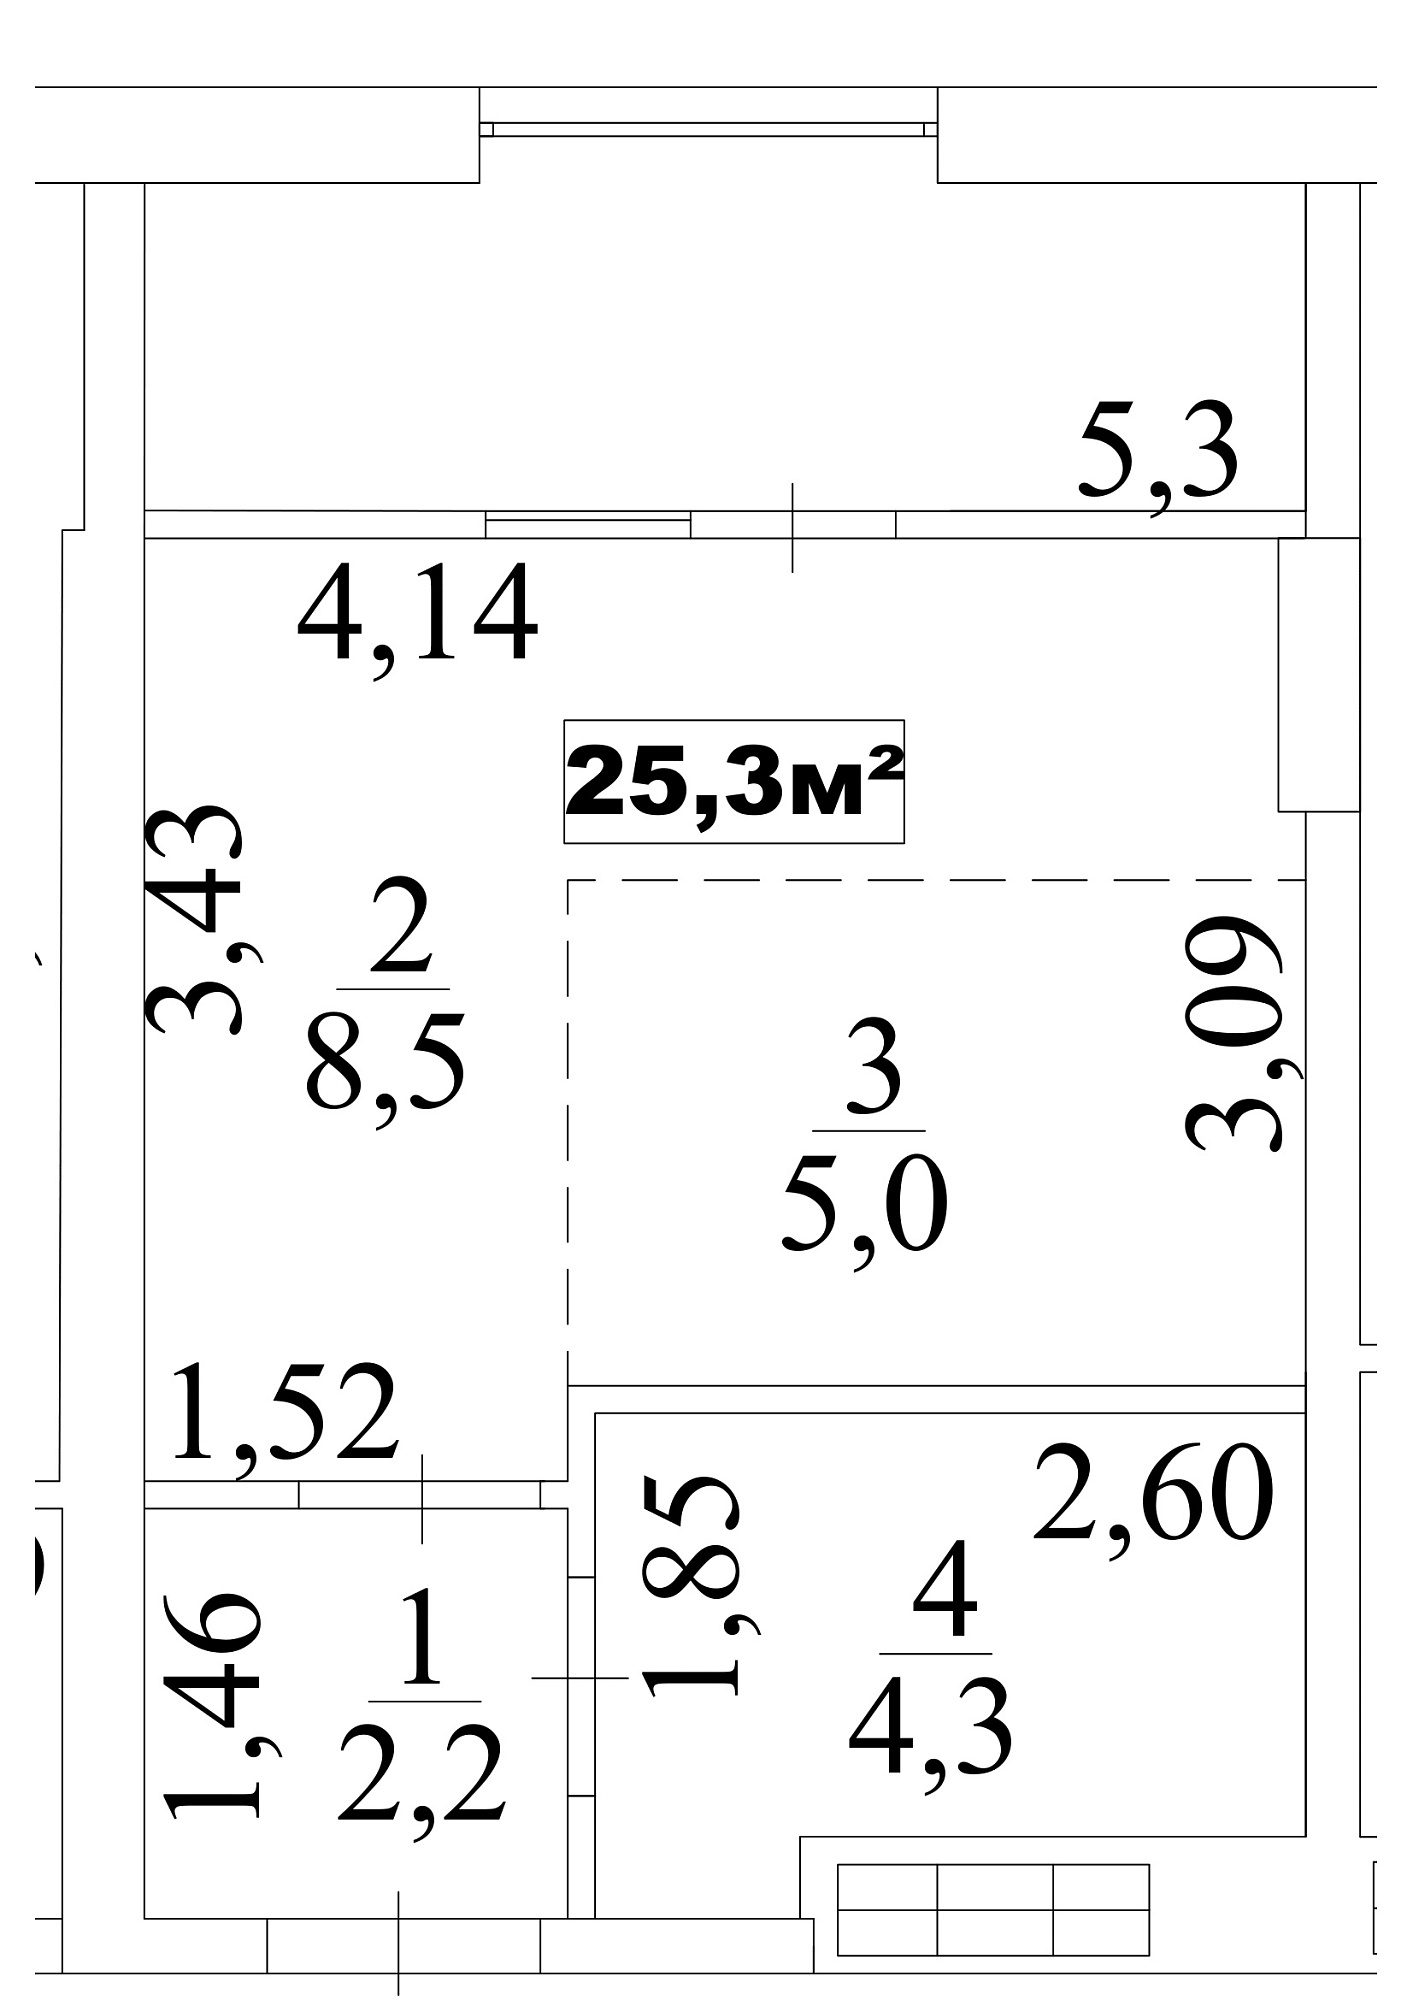 Планировка Smart-квартира площей 25.3м2, AB-10-10/0084в.